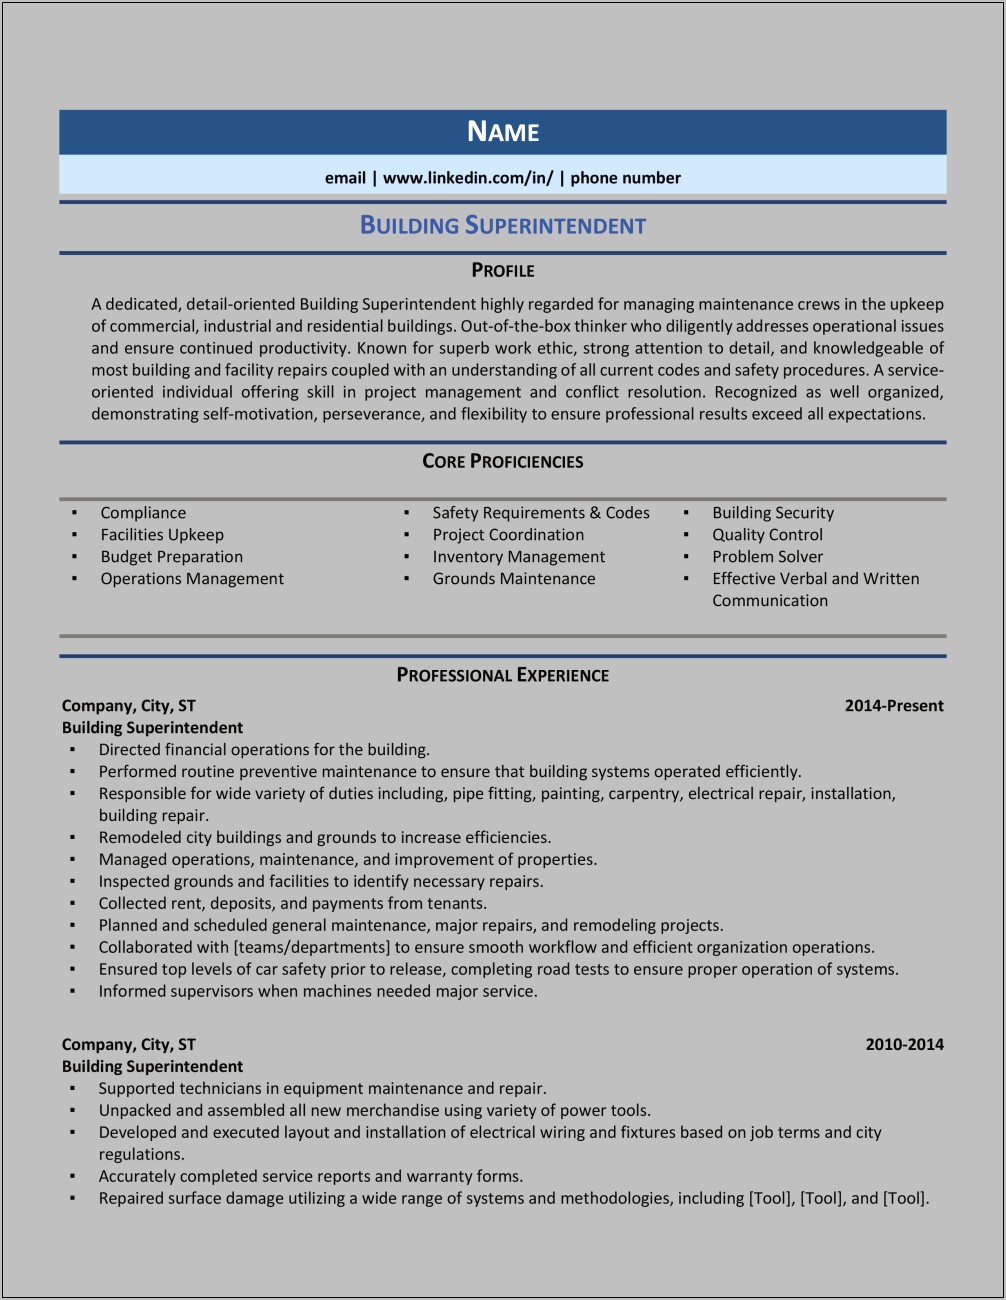 Sample Resume For School Superintendent Position